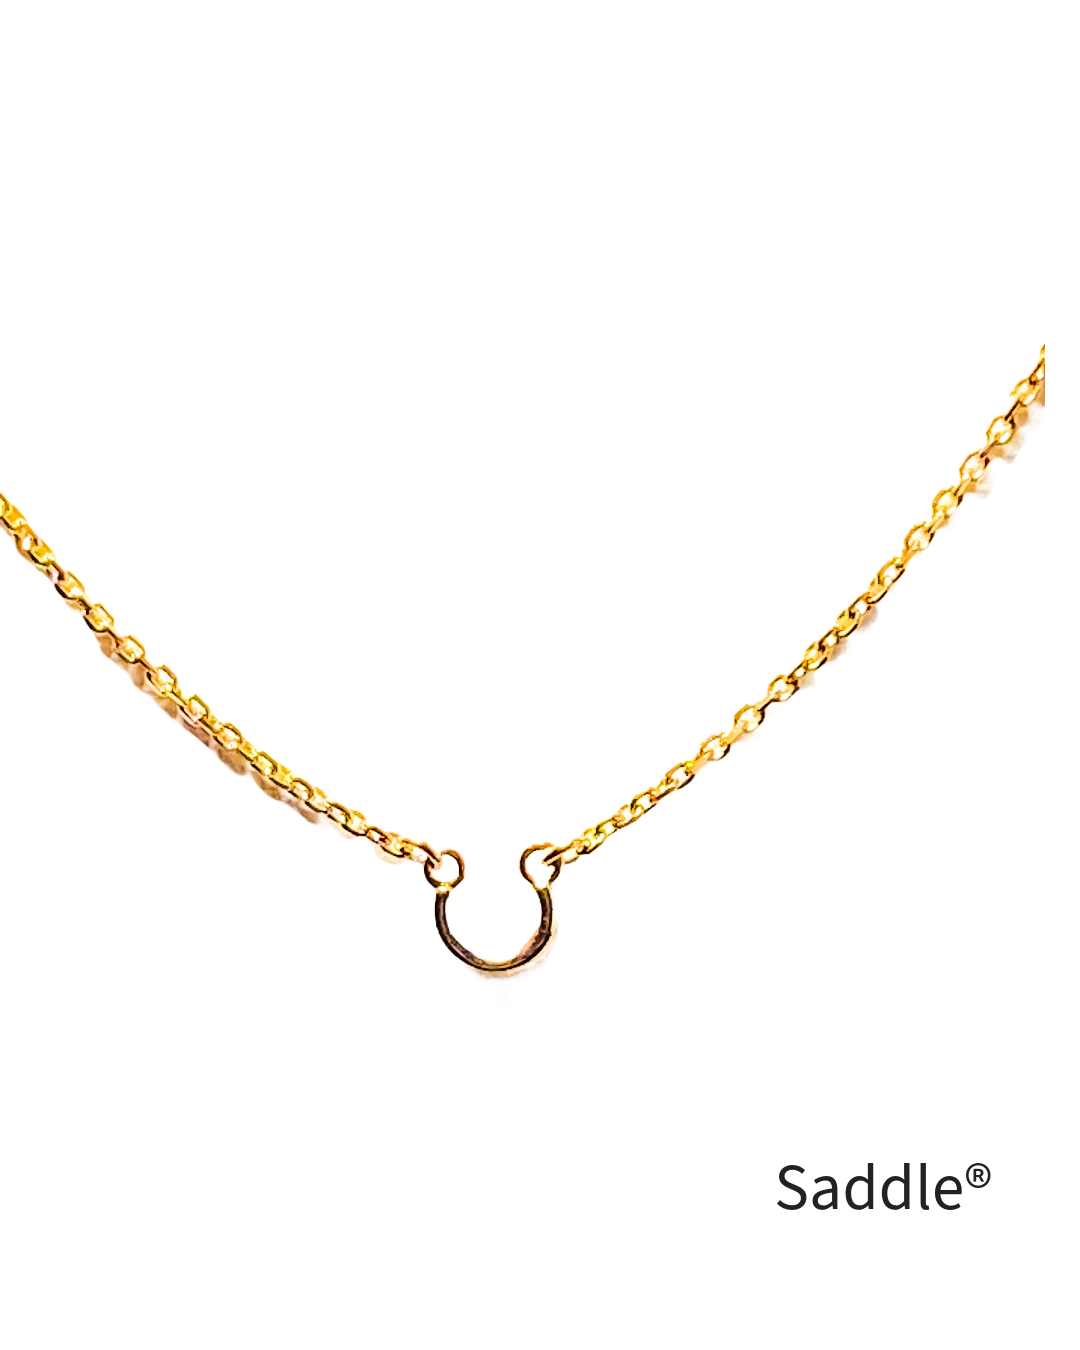 14k Yellow Gold Adjustable 16/18″ Chain the Pendant Saddle®